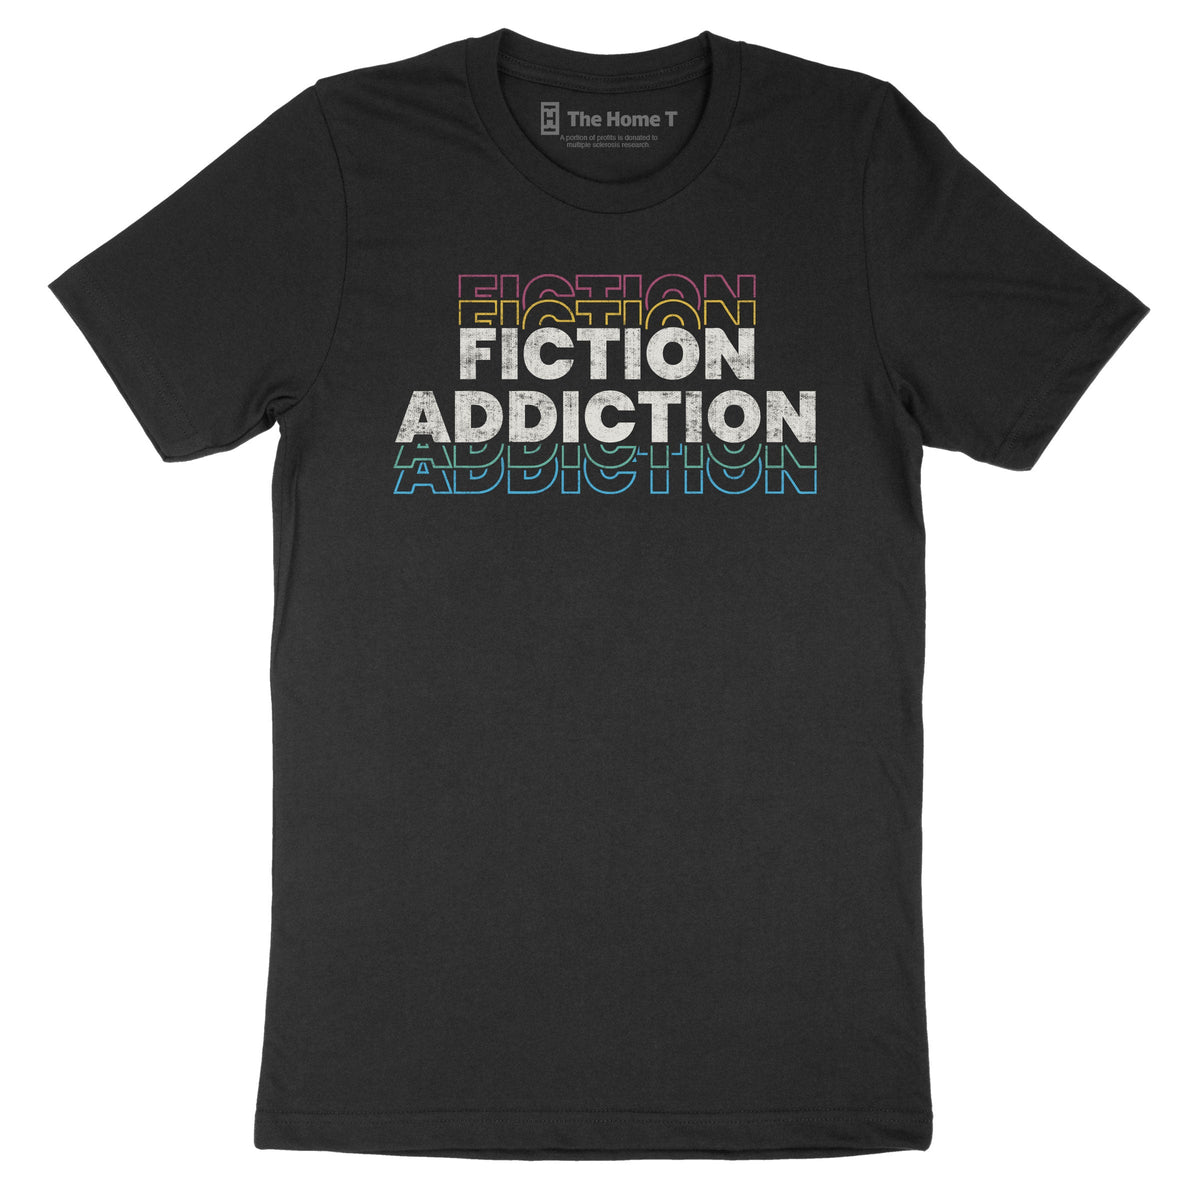 Fiction Addiction Repeat